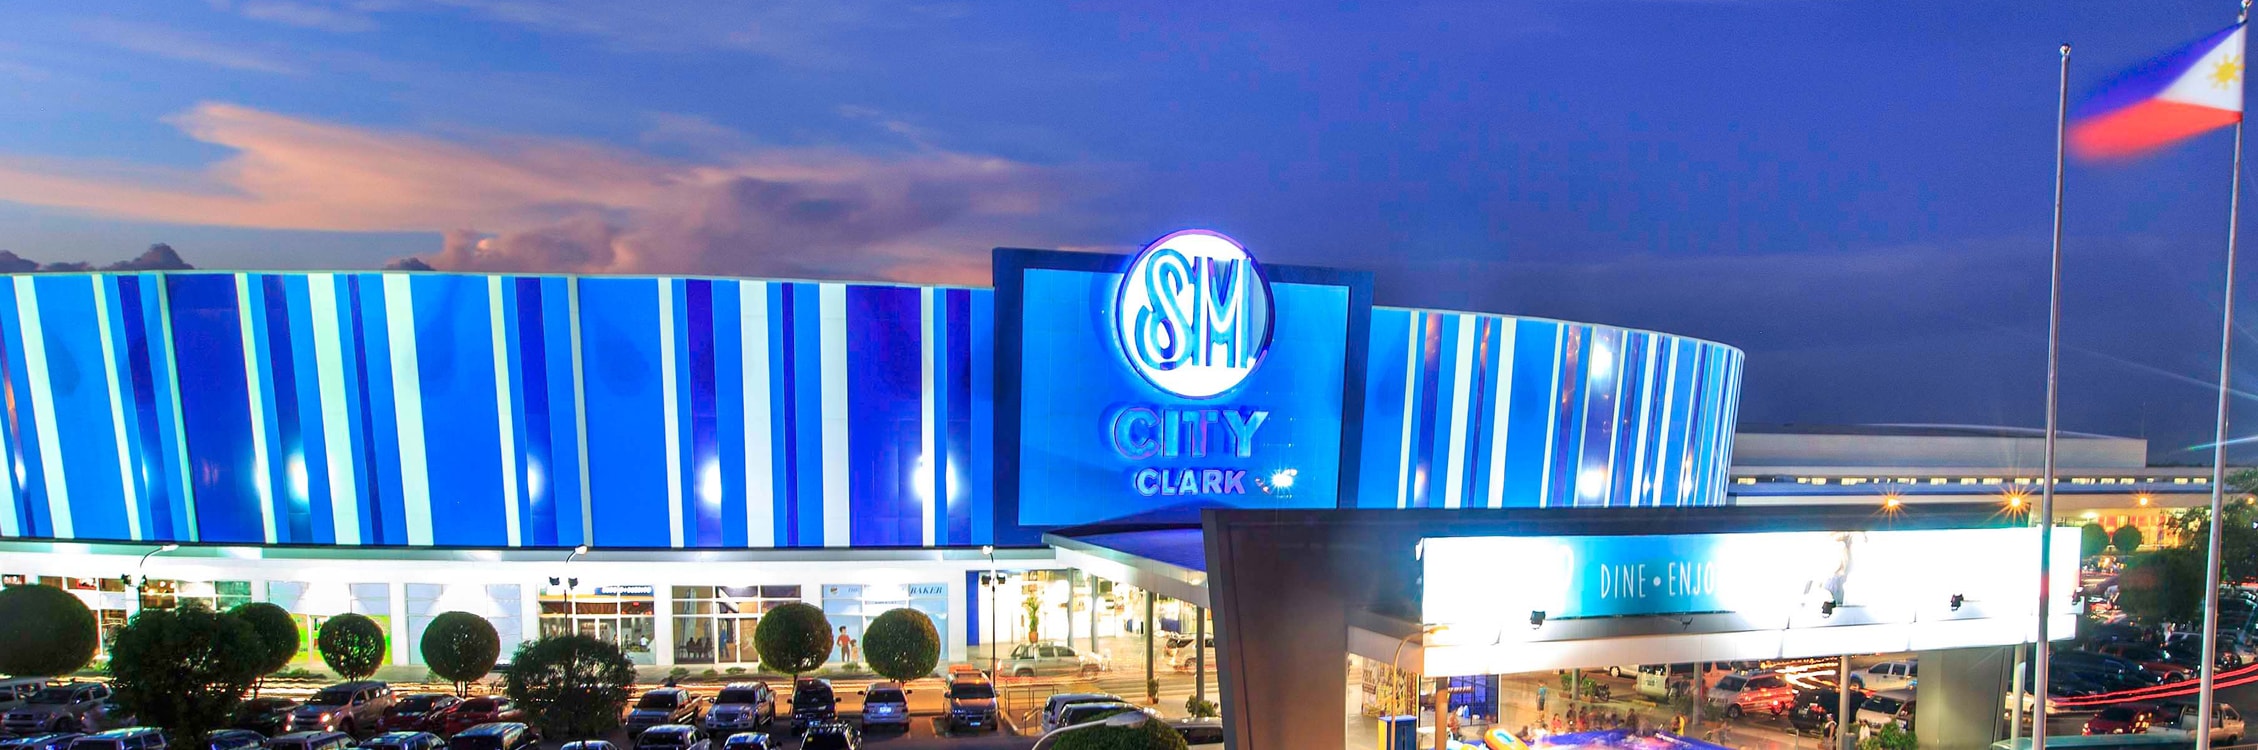 SM City Clark